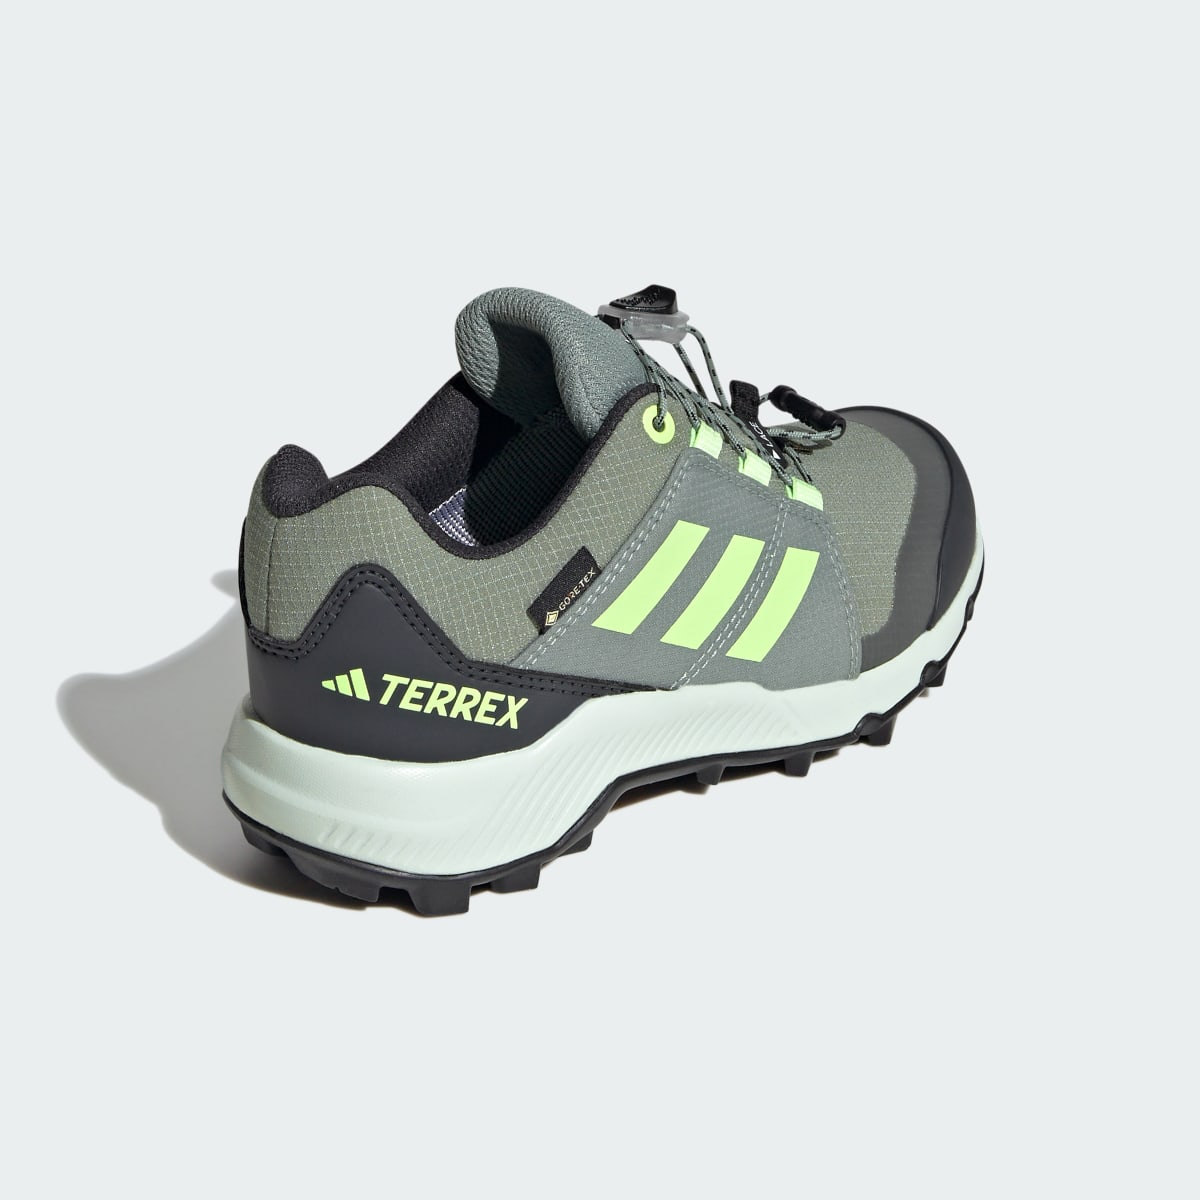 Adidas Chaussure de randonnée Terrex GORE-TEX. 6